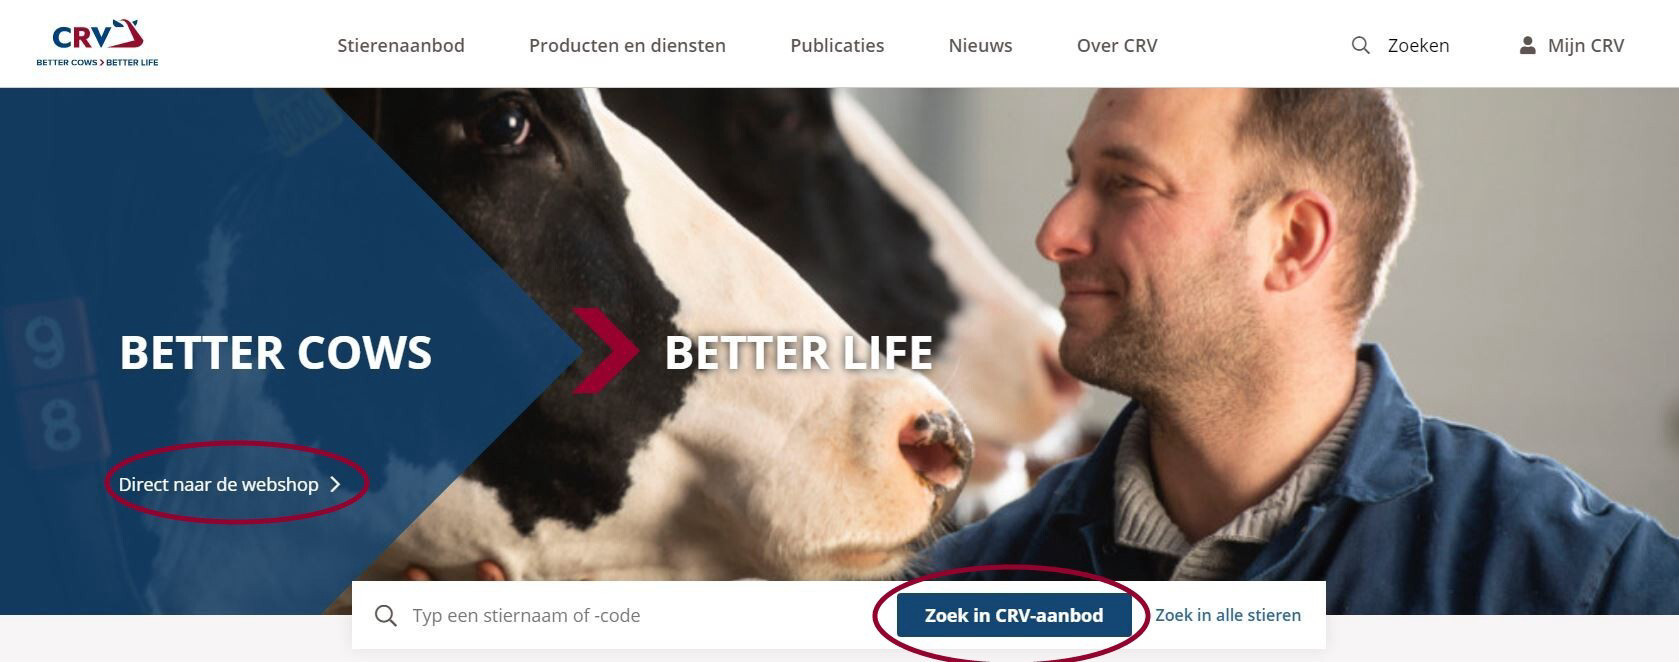 homepage crv4all.nl